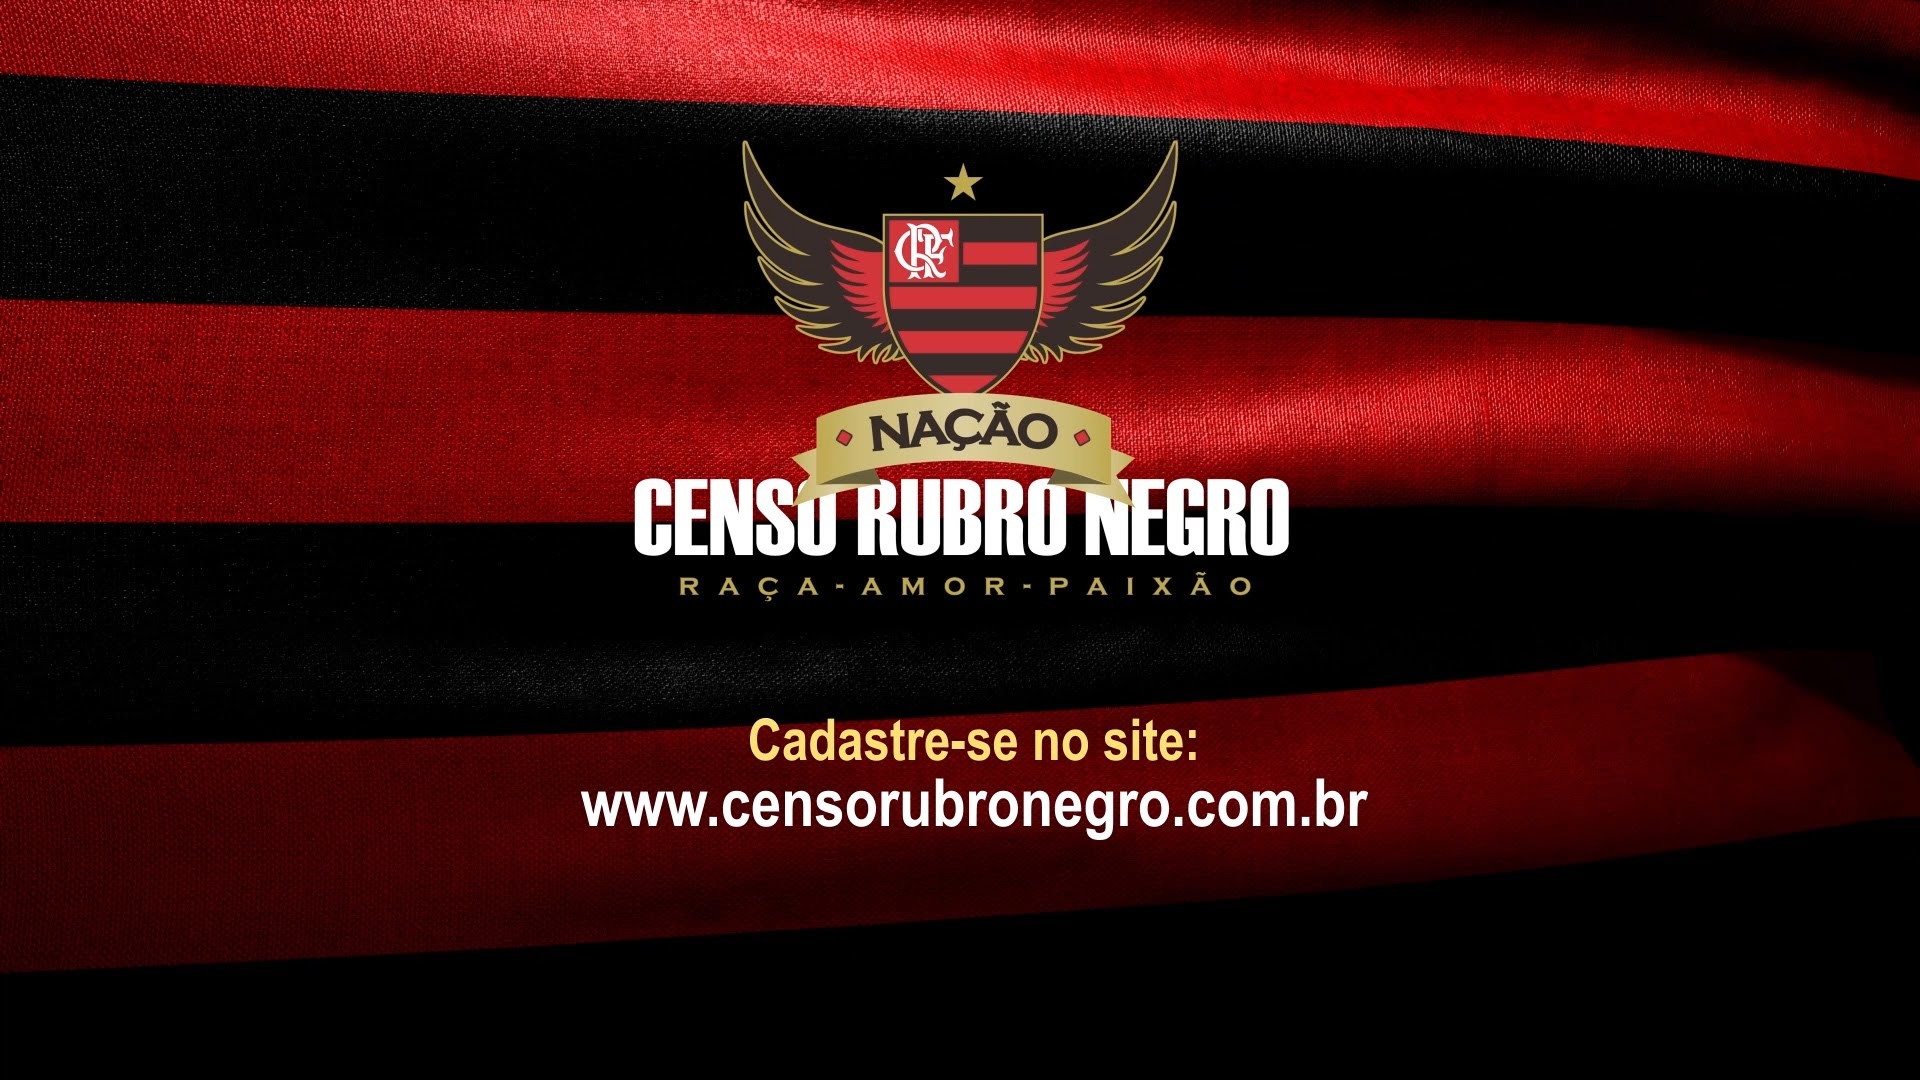 Flamengo Wallpaper Image